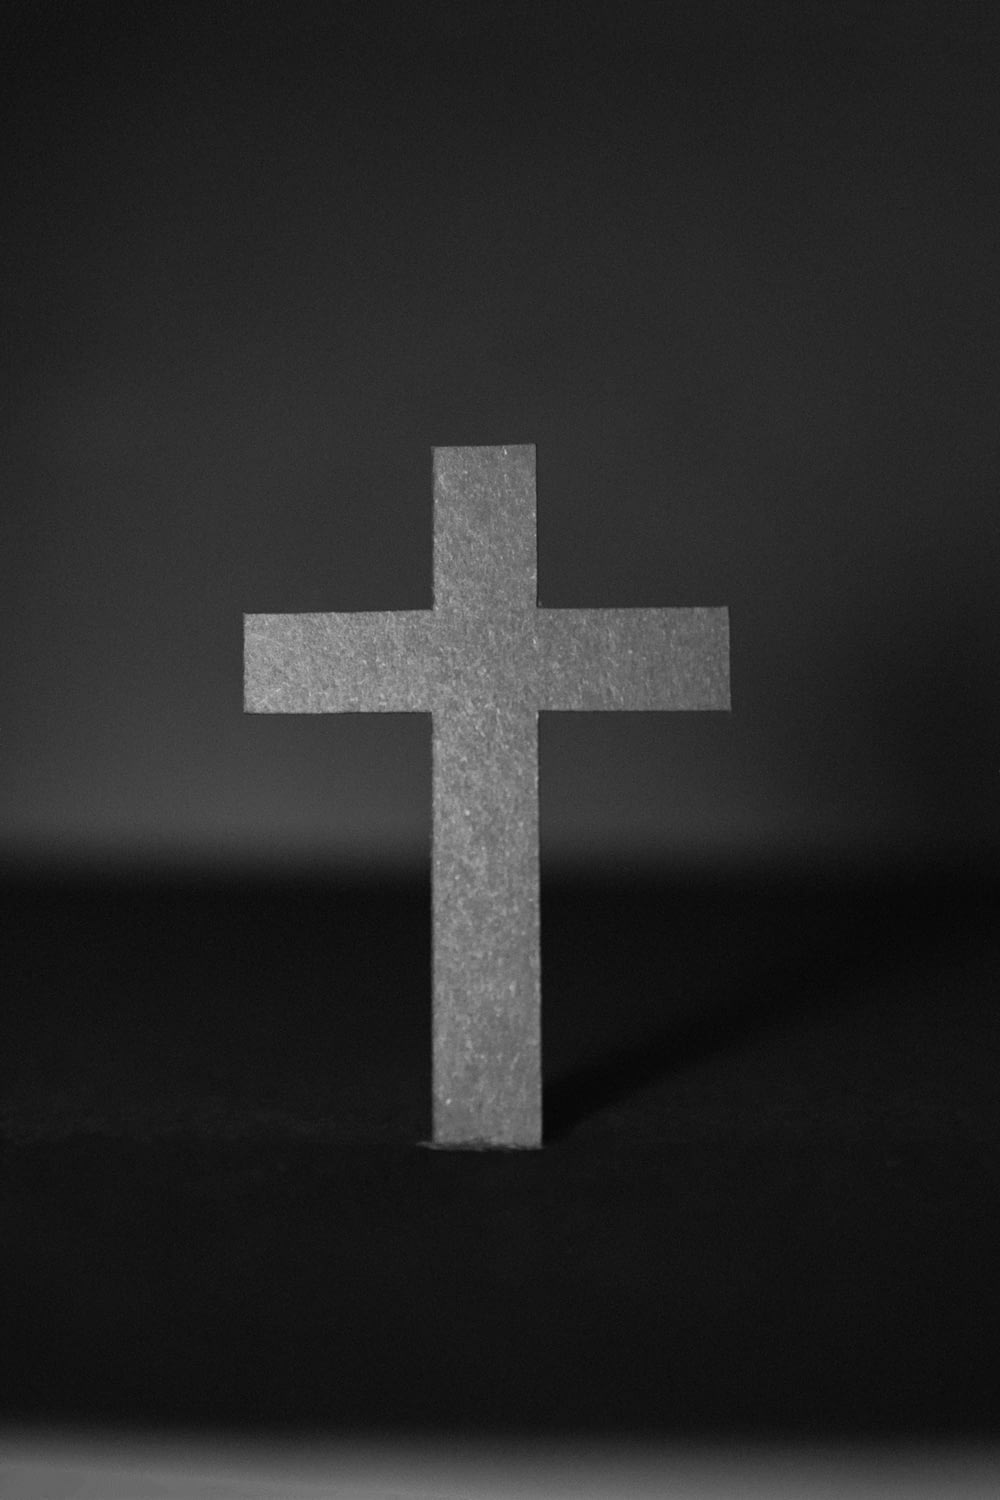 white cross on black surface